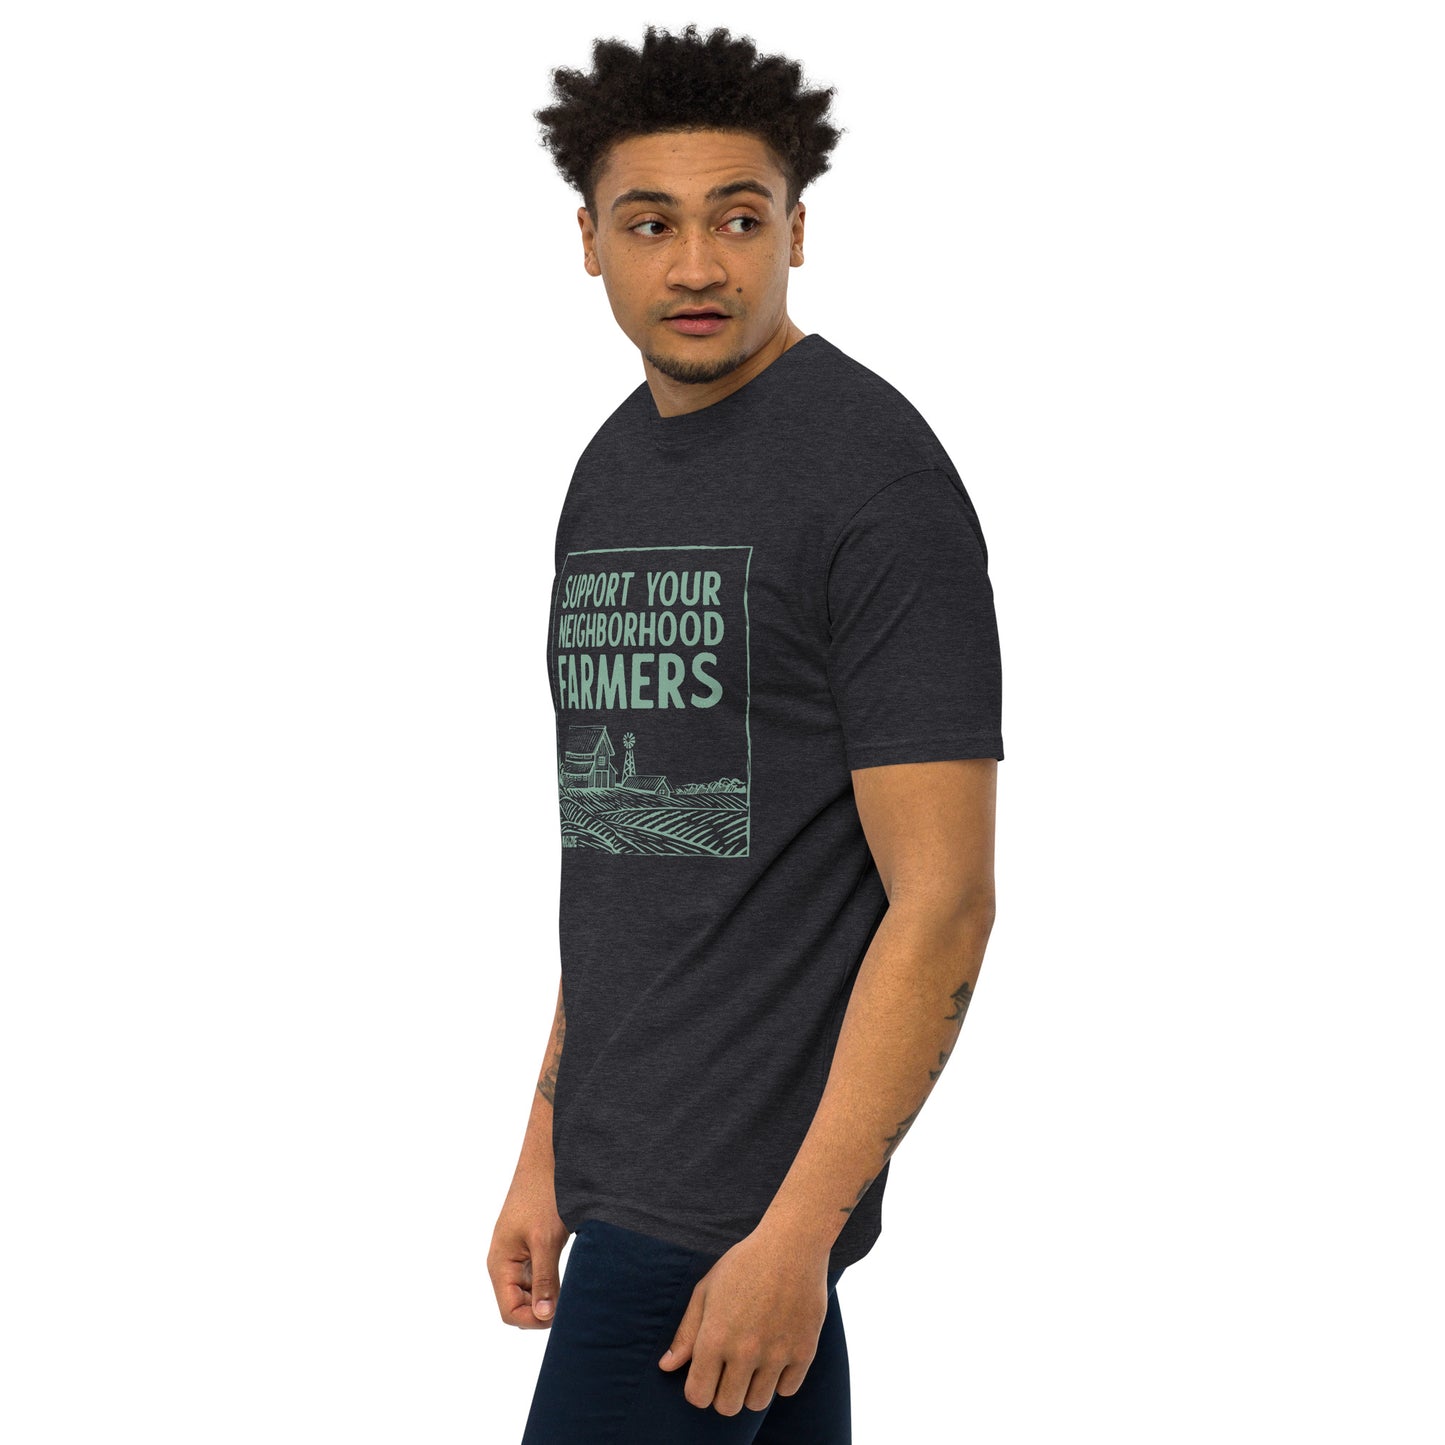 "Support Your Neighborhood Farmers" Men's T-Shirt